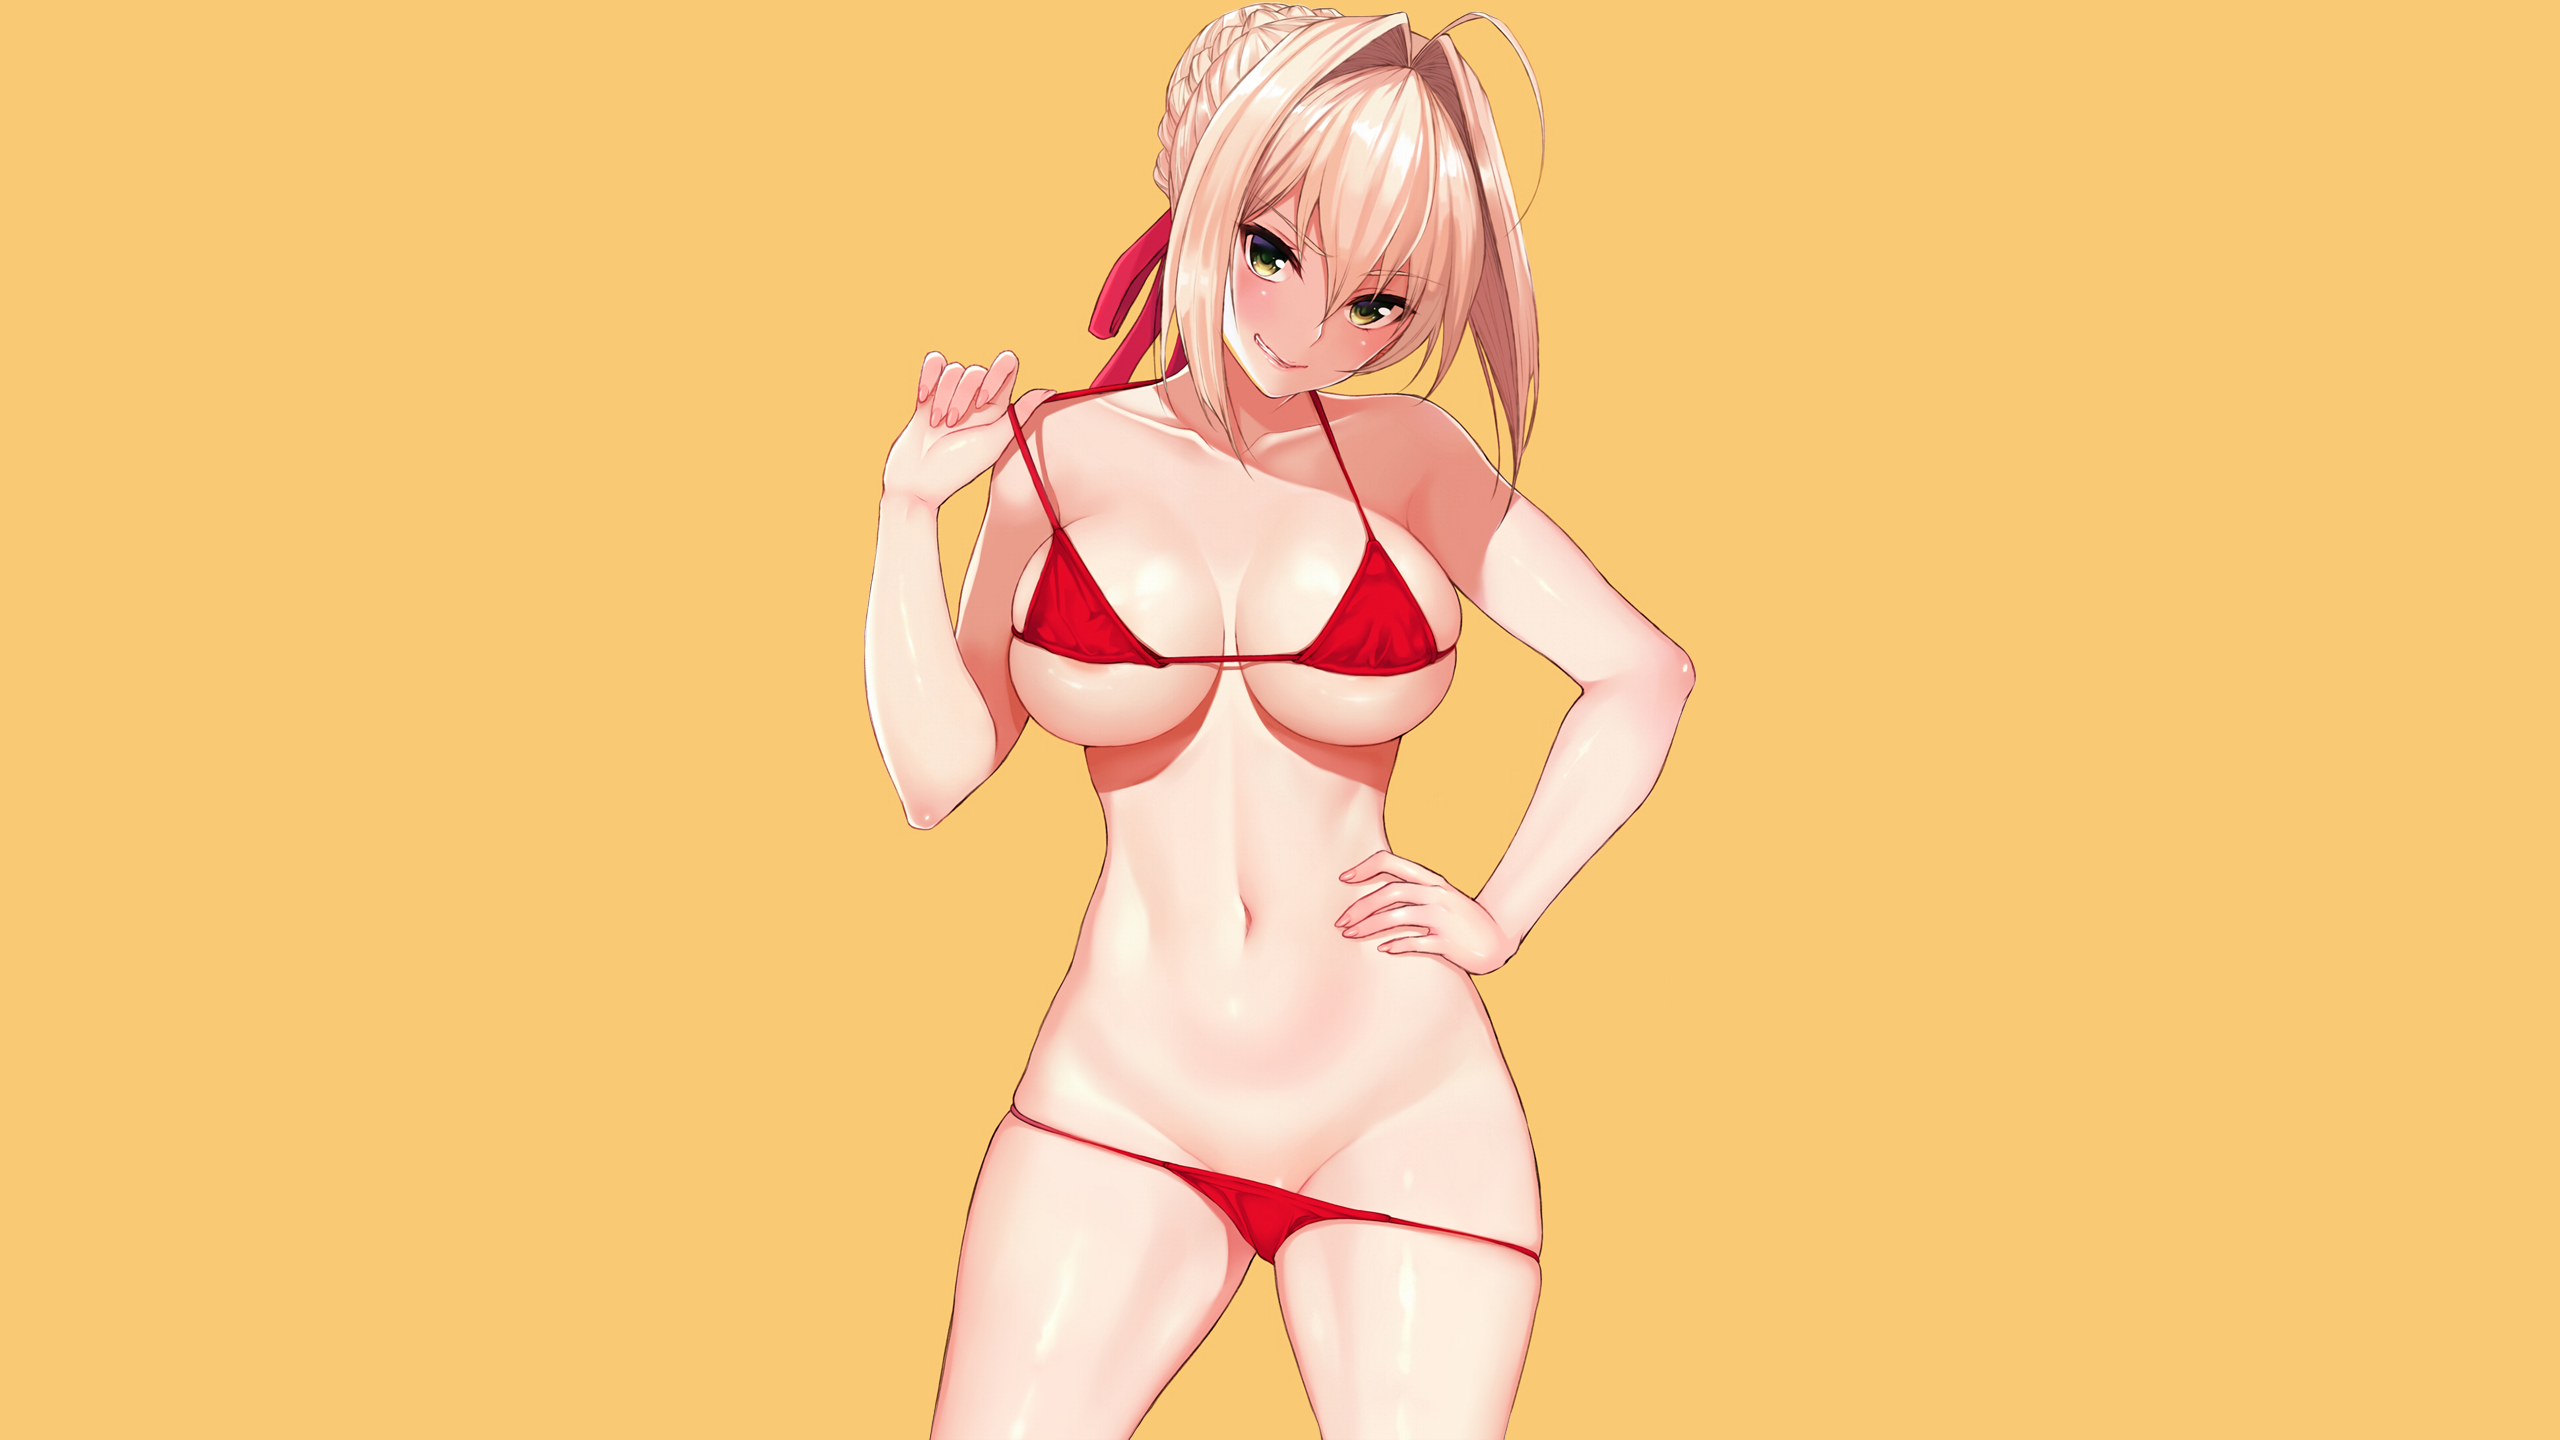 Anime 2560x1440 anime anime girls ecchi big boobs boobs swimwear bikini bikini lift thighs blonde green eyes smiling Nero Claudius yellow background bright